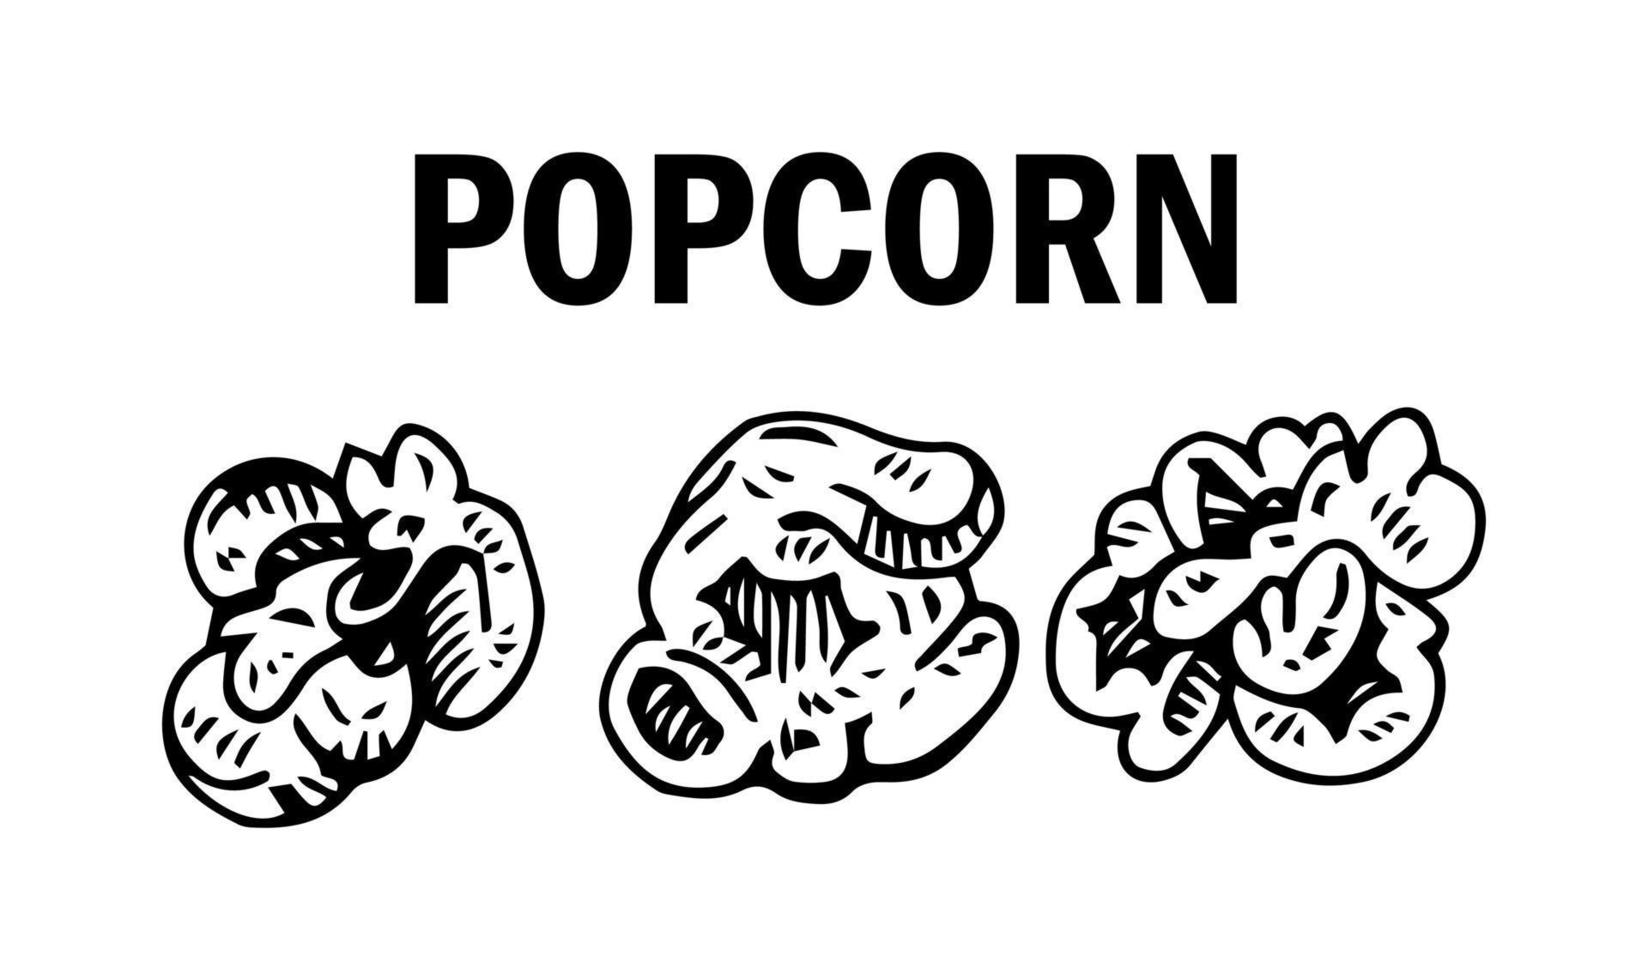 Pop corn sketch style vector illustration. Old hand drawn engraving imitation. Popcorn illustration